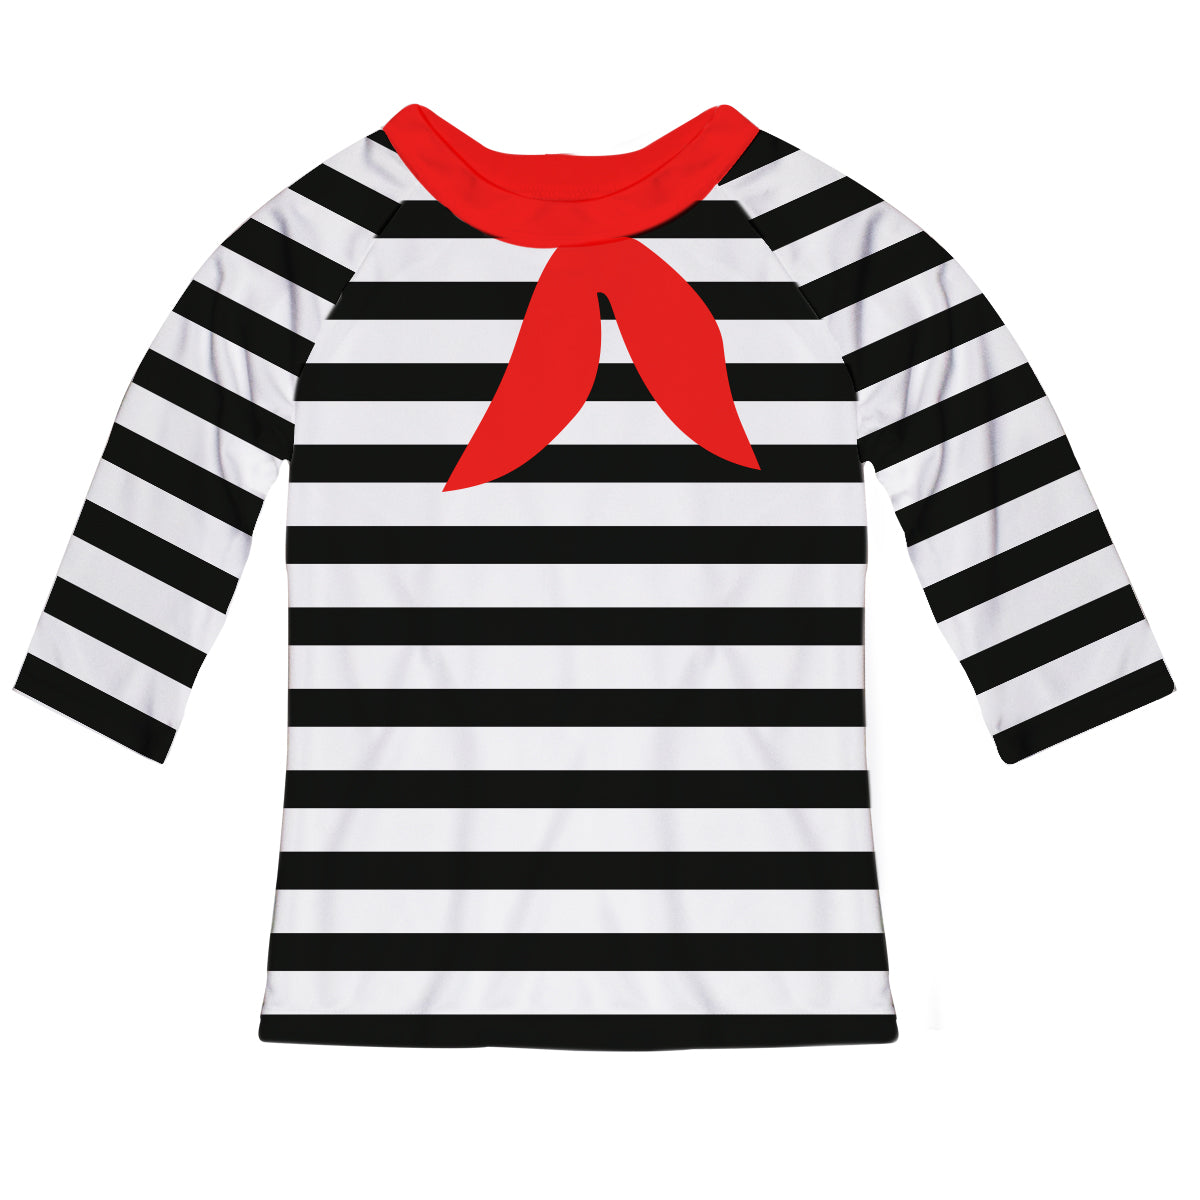 Paris Stripes Black And White Raglan Tee Shirt 3/4 Sleeve